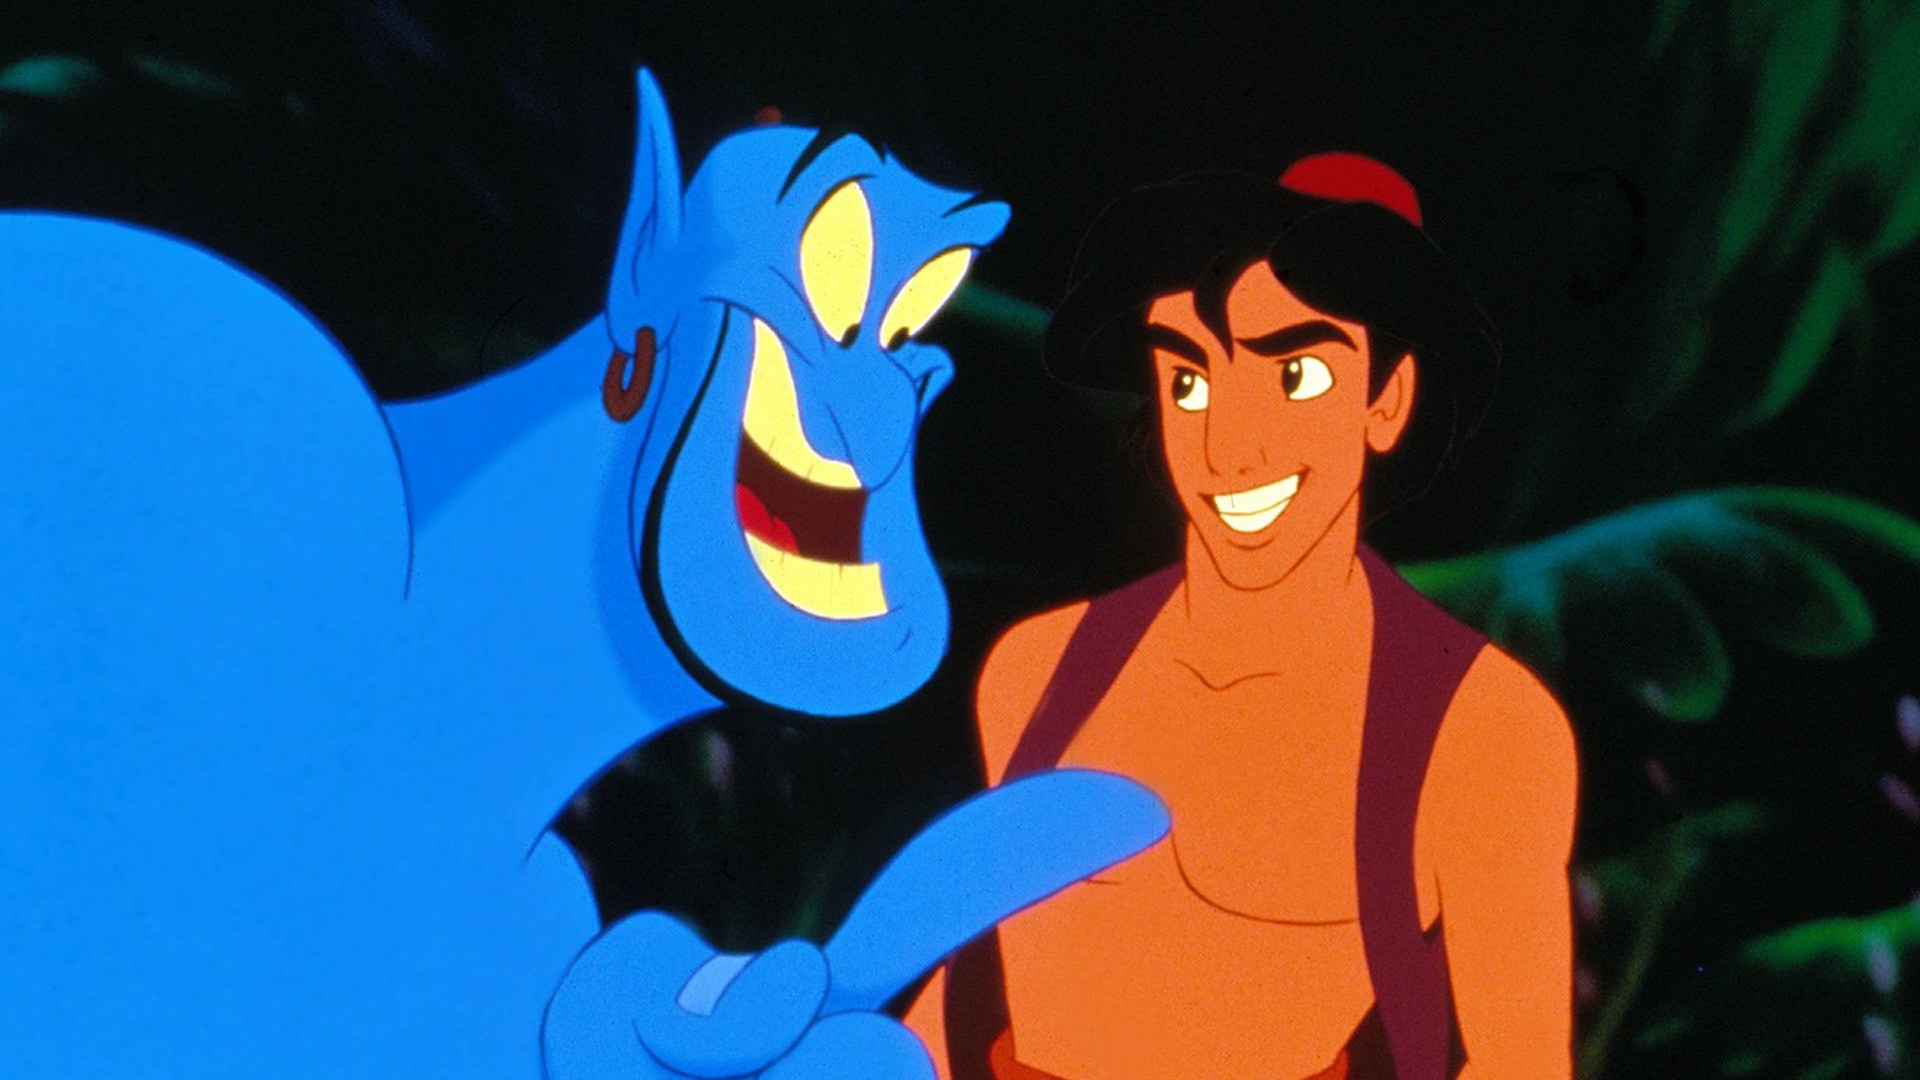 The Genie and Aladdin in the original Disney Film